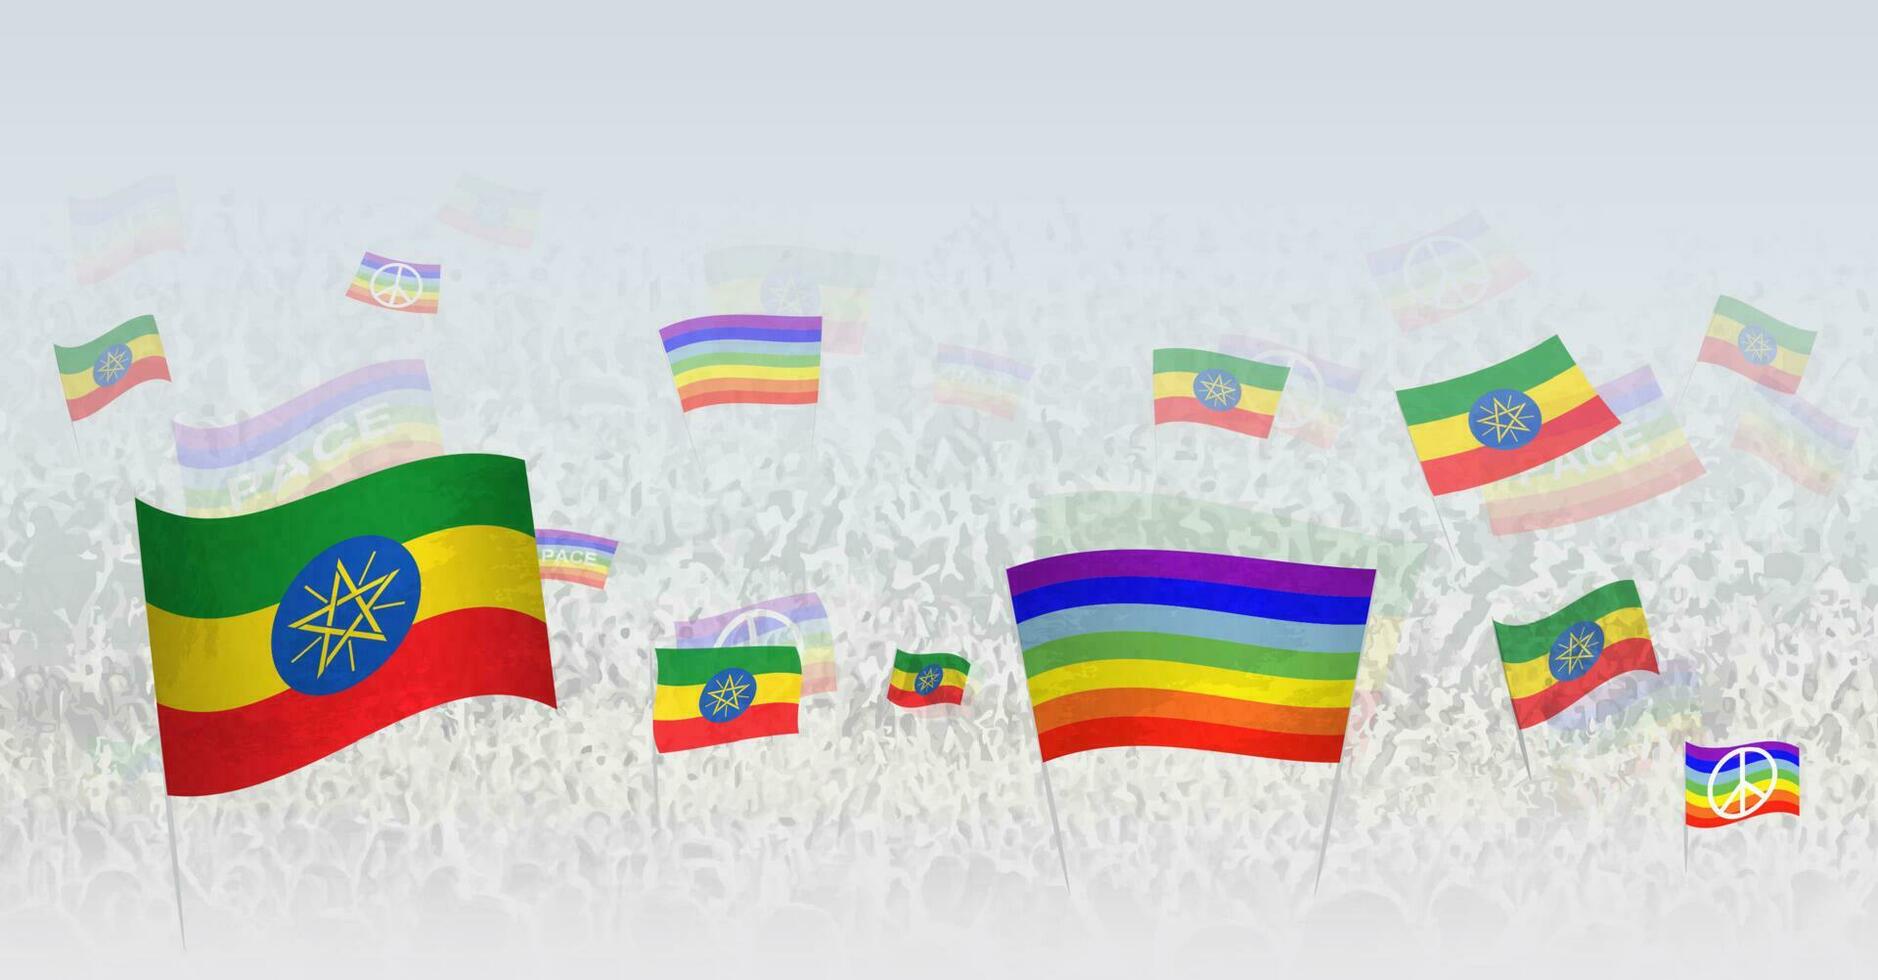 mensen golvend vrede vlaggen en vlaggen van Ethiopië. illustratie van menigte vieren of protesteren met vlag van Ethiopië en de vrede vlag. vector